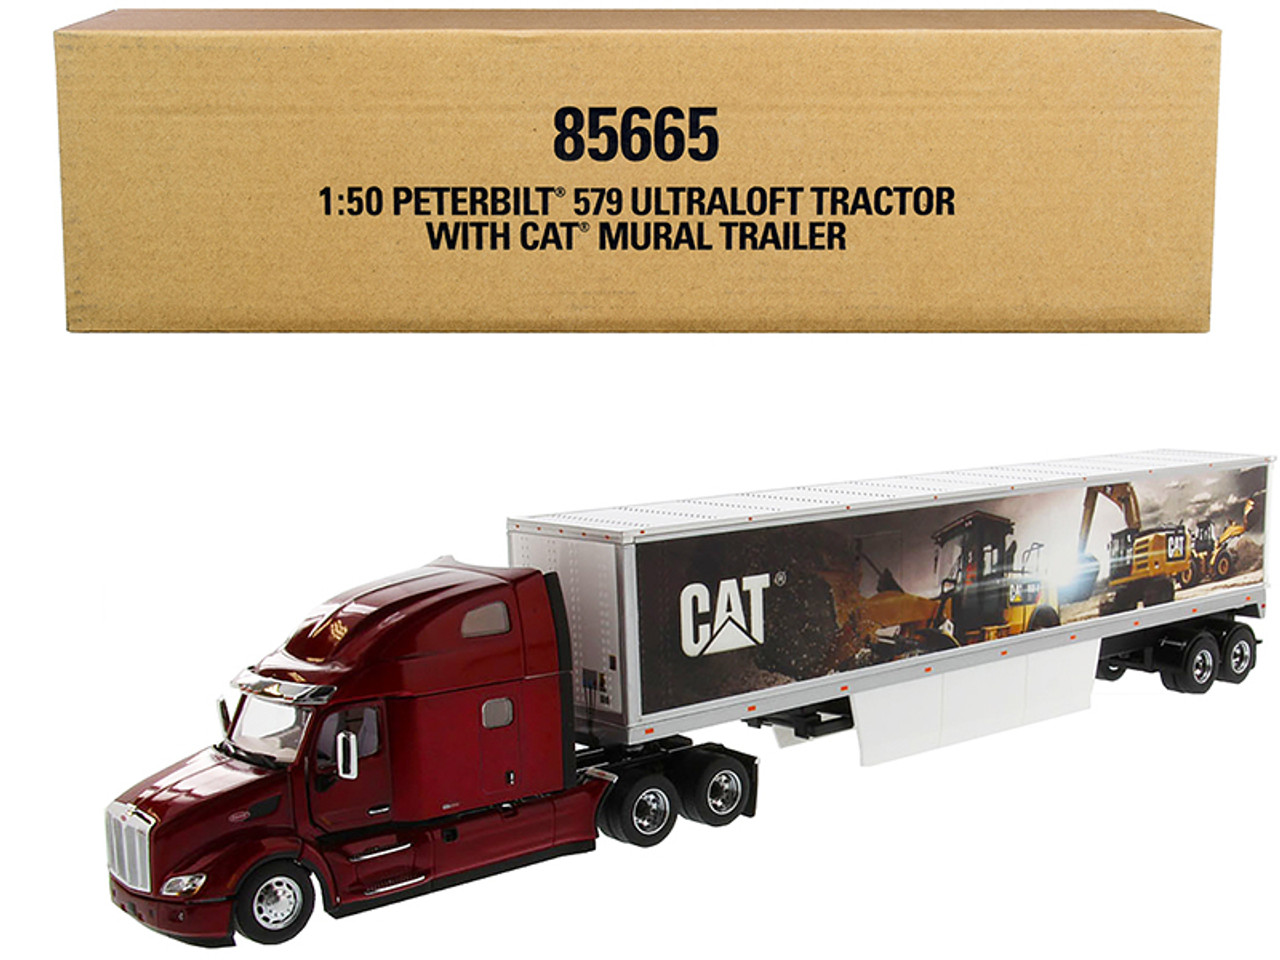 Peterbilt 579 UltraLoft Truck Tractor Red with "CAT Caterpillar" Mural Dry Van Trailer "Transport Series" 1/50 Diecast Model by Diecast Masters